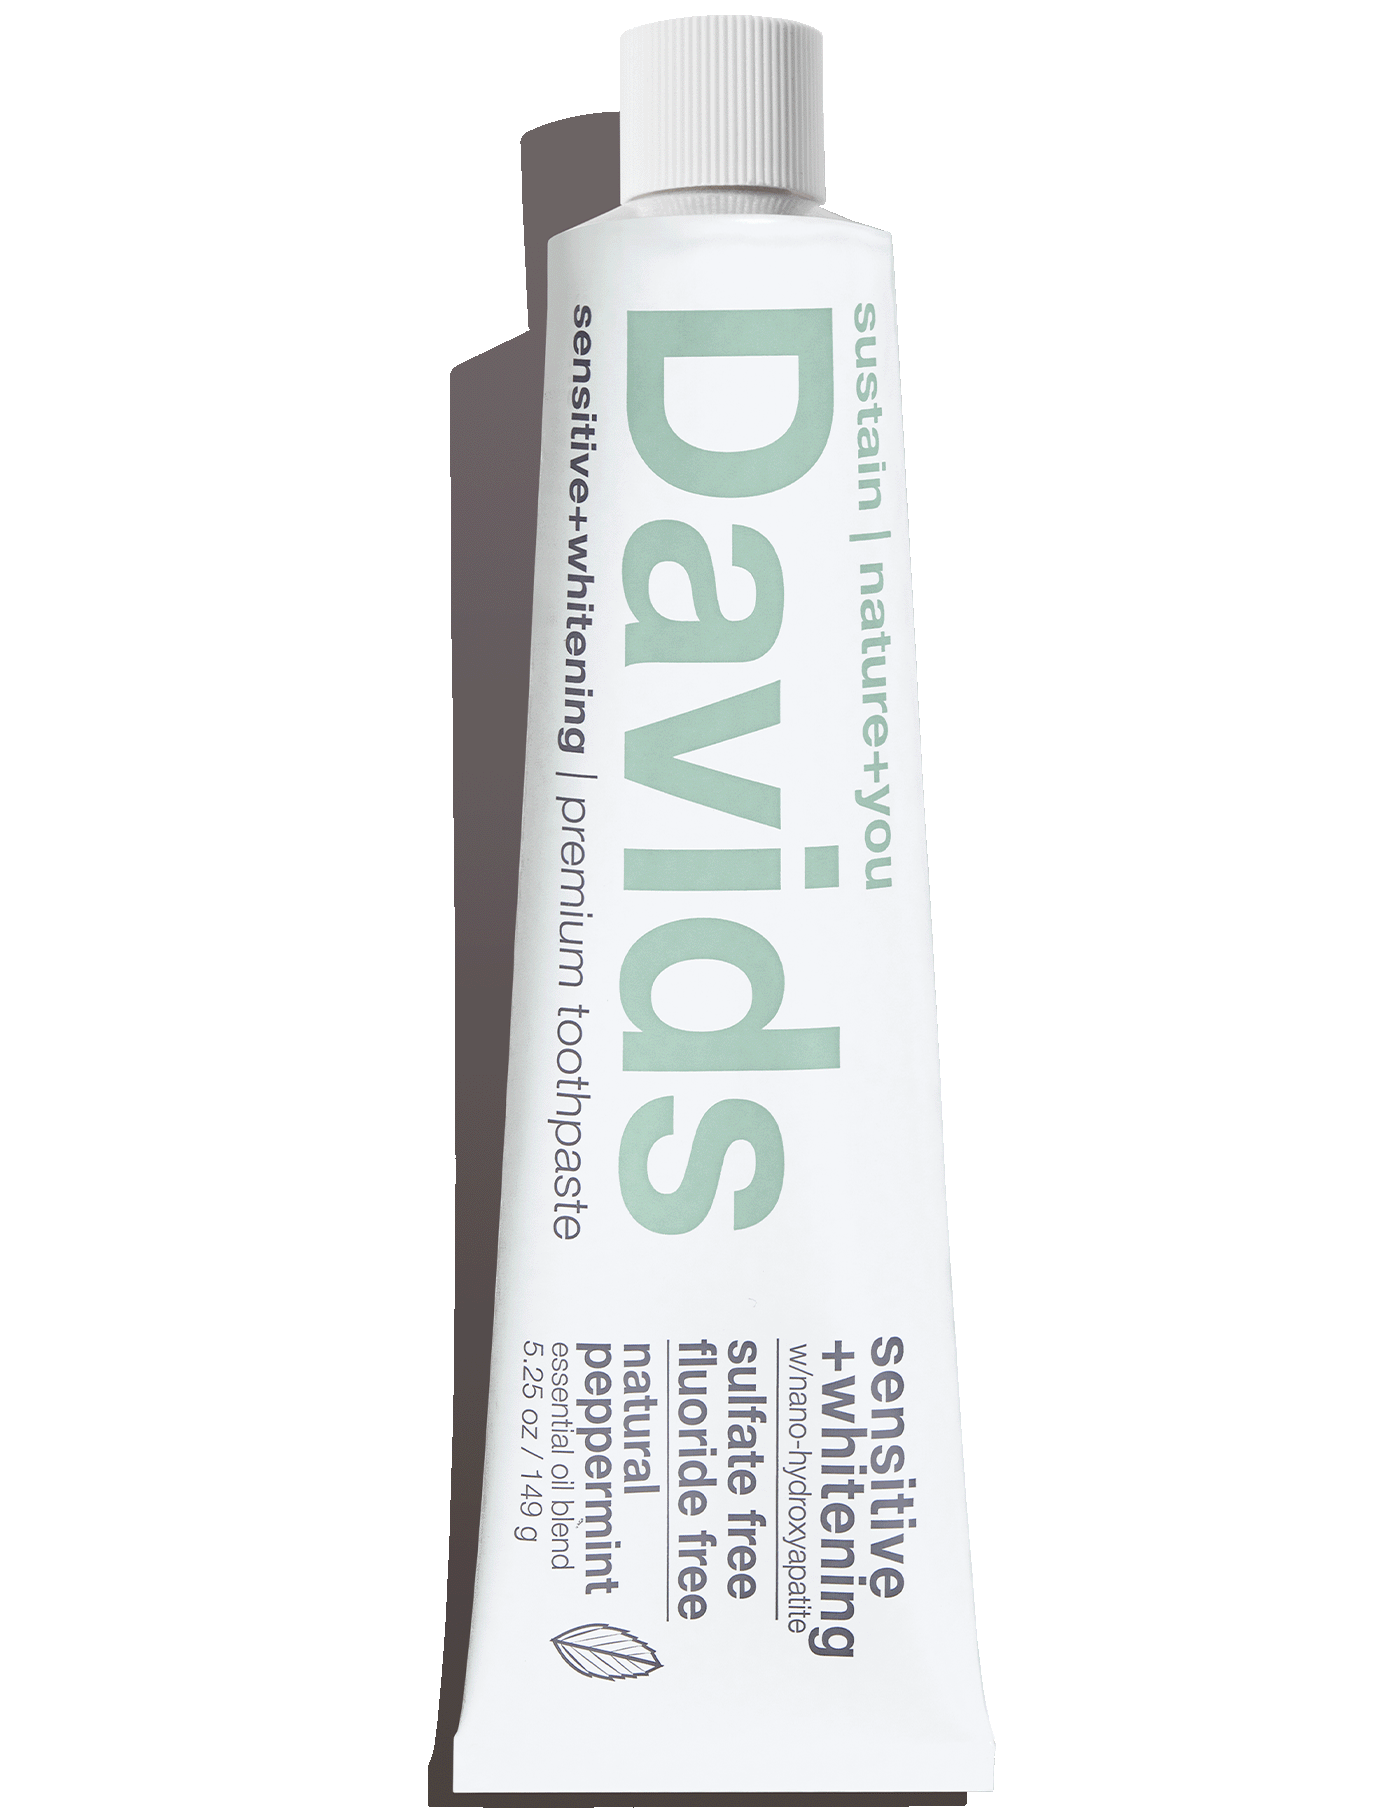 Davids Sensitive + Whitening Nano-Hydroxyapatite Premium Toothpaste - Peppermint